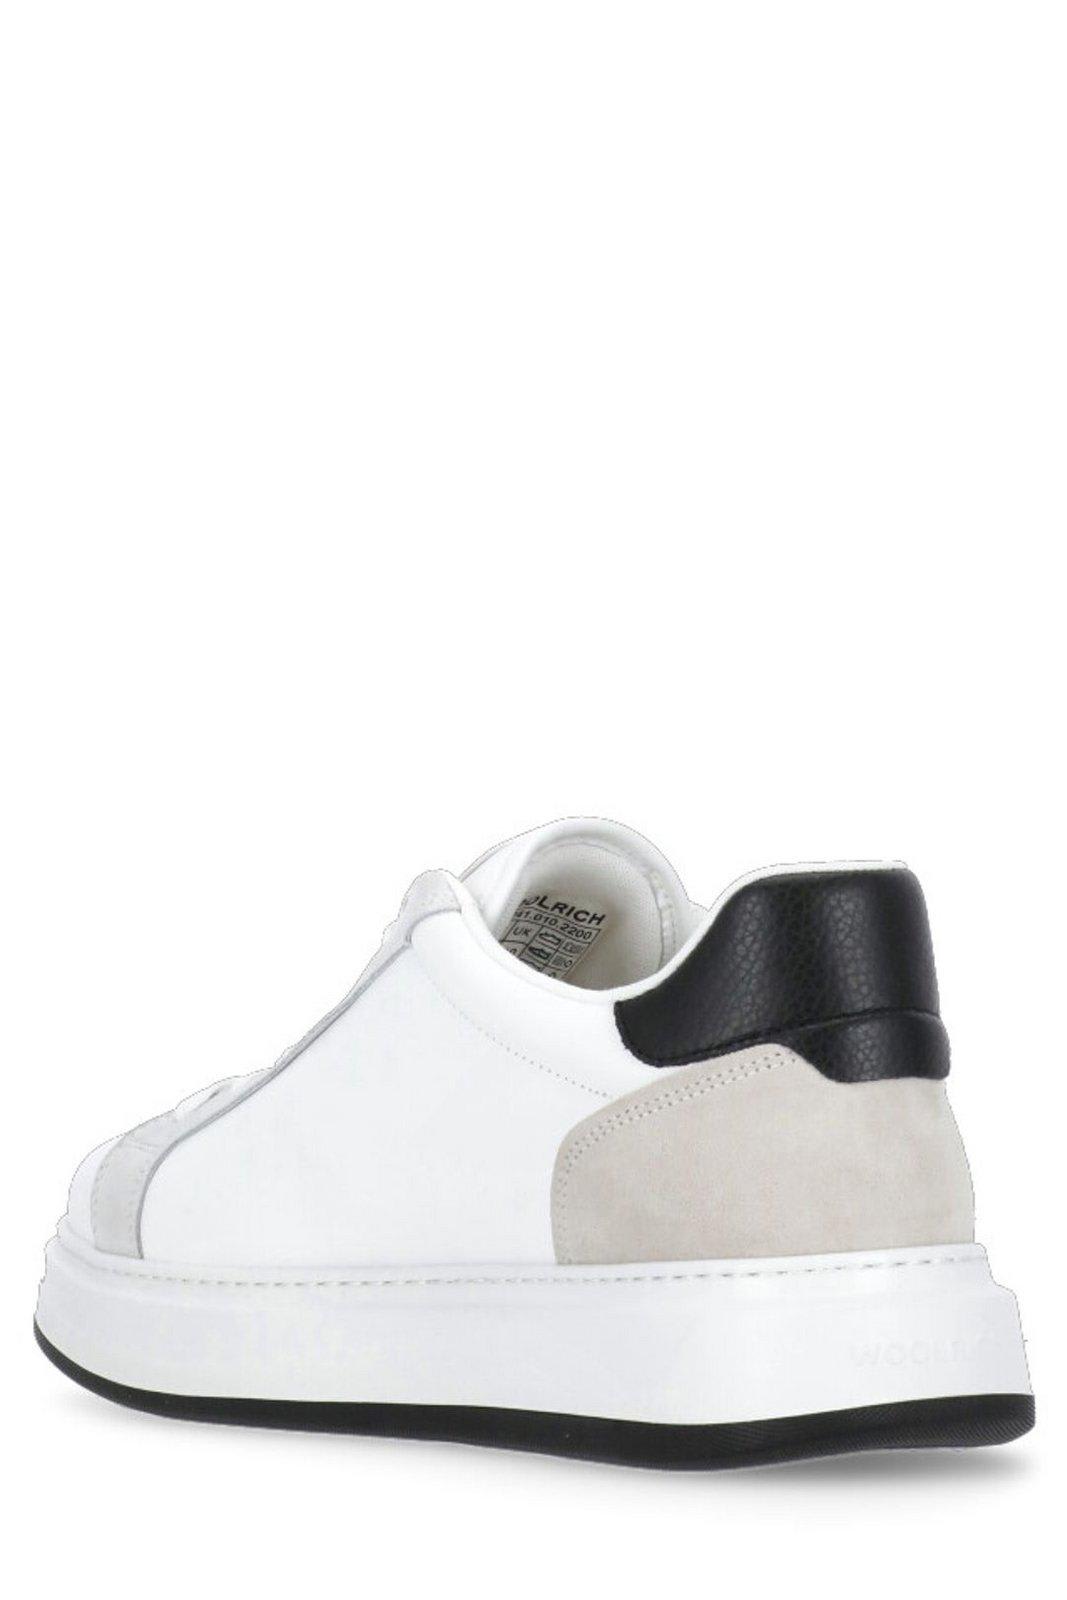 Shop Woolrich Arrow Lace-up Sneakers In Bianco Bianco